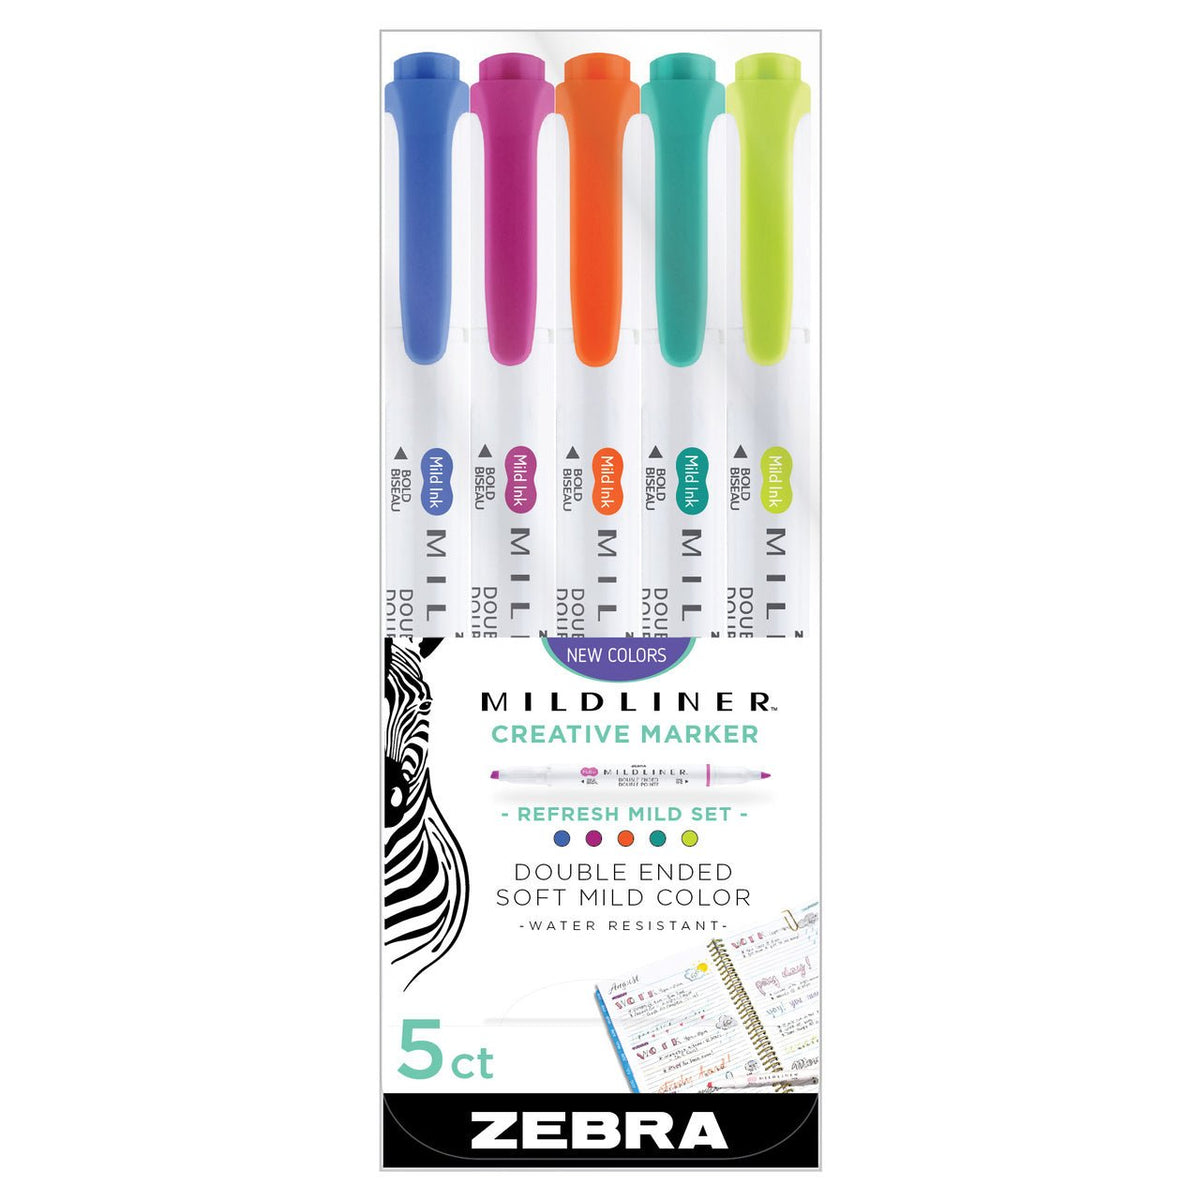 What Pens Work With Zebra Mildliners?